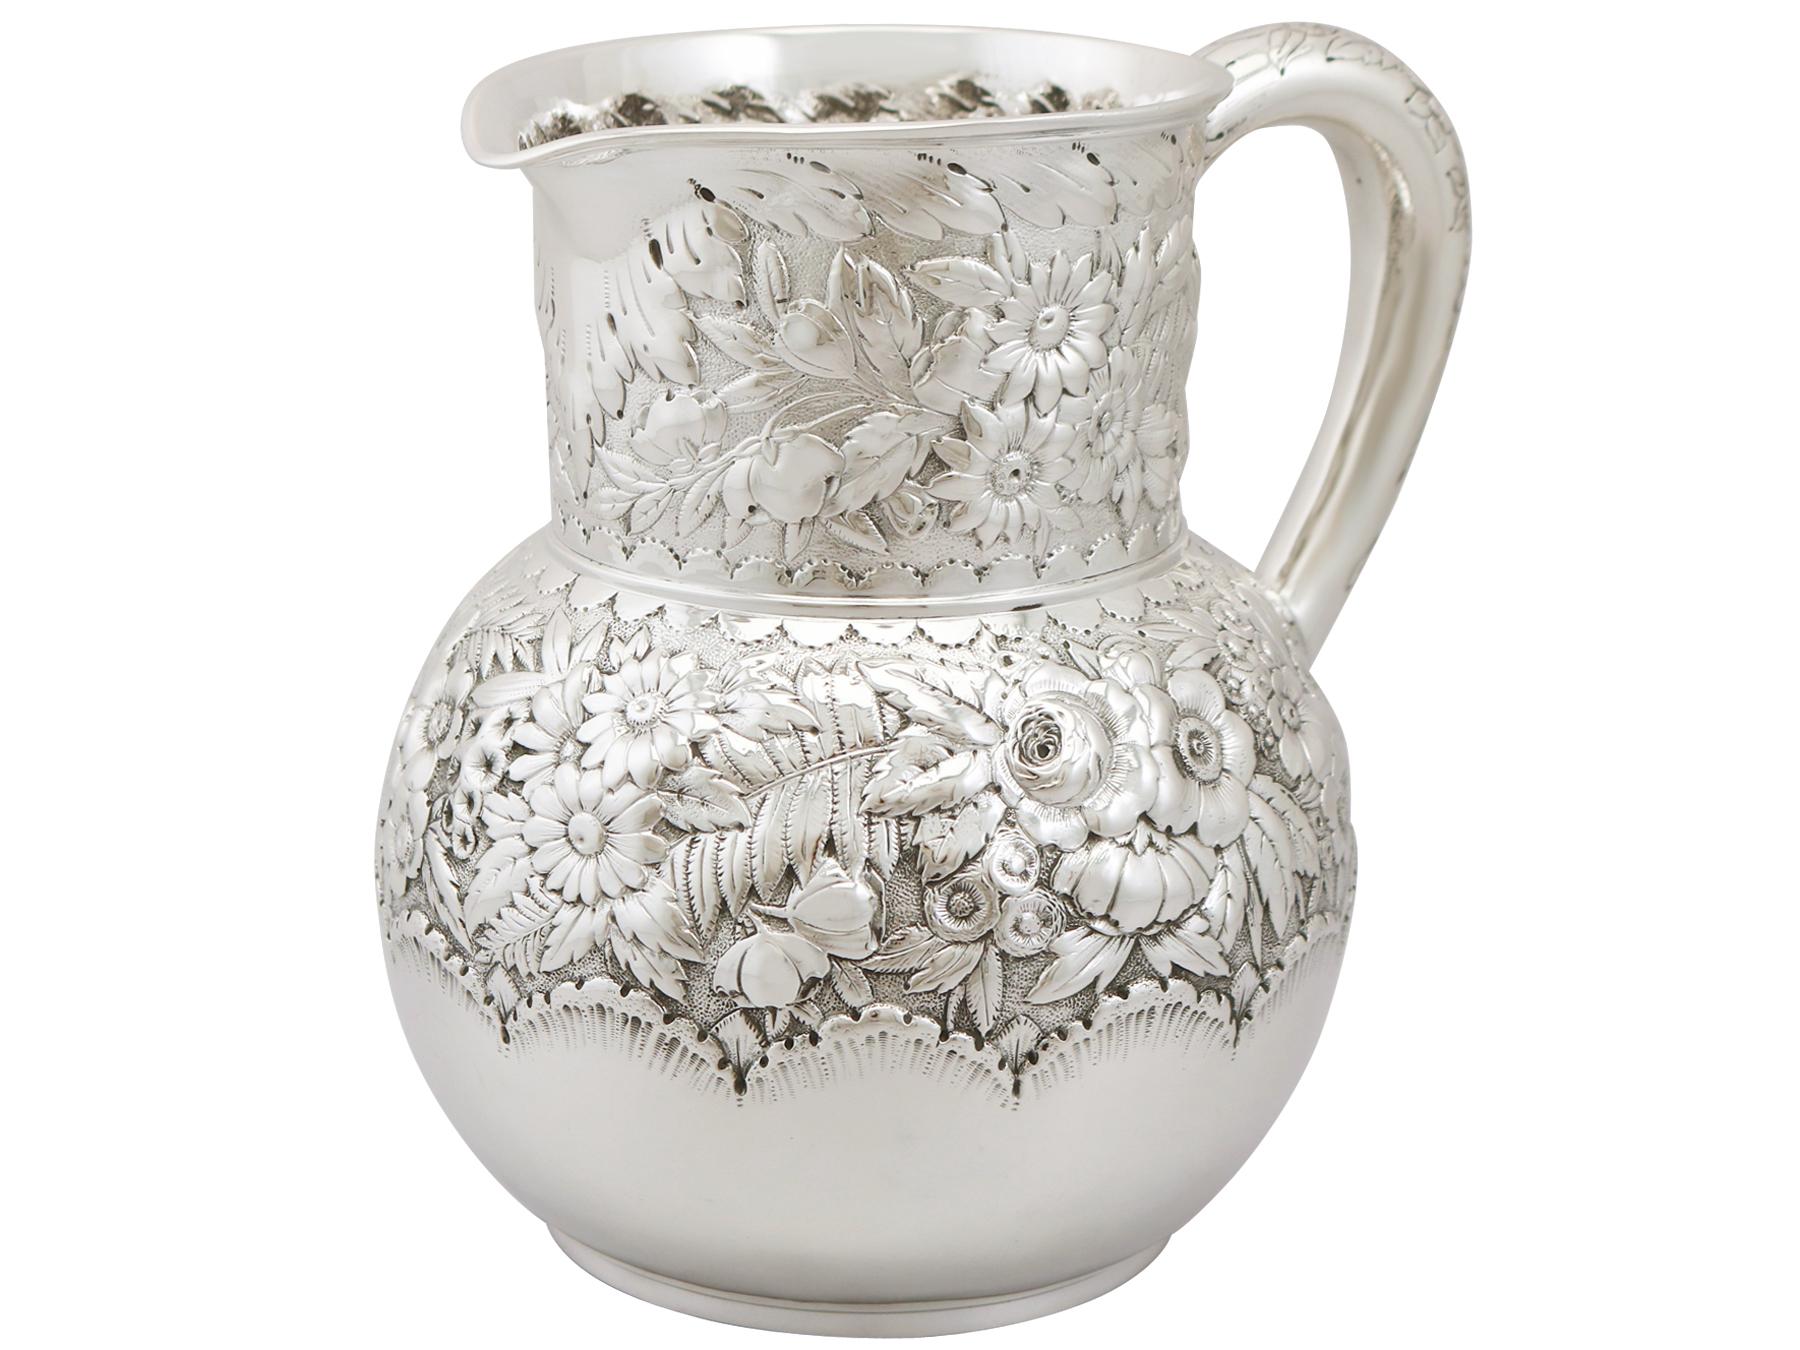 antique water pitcher